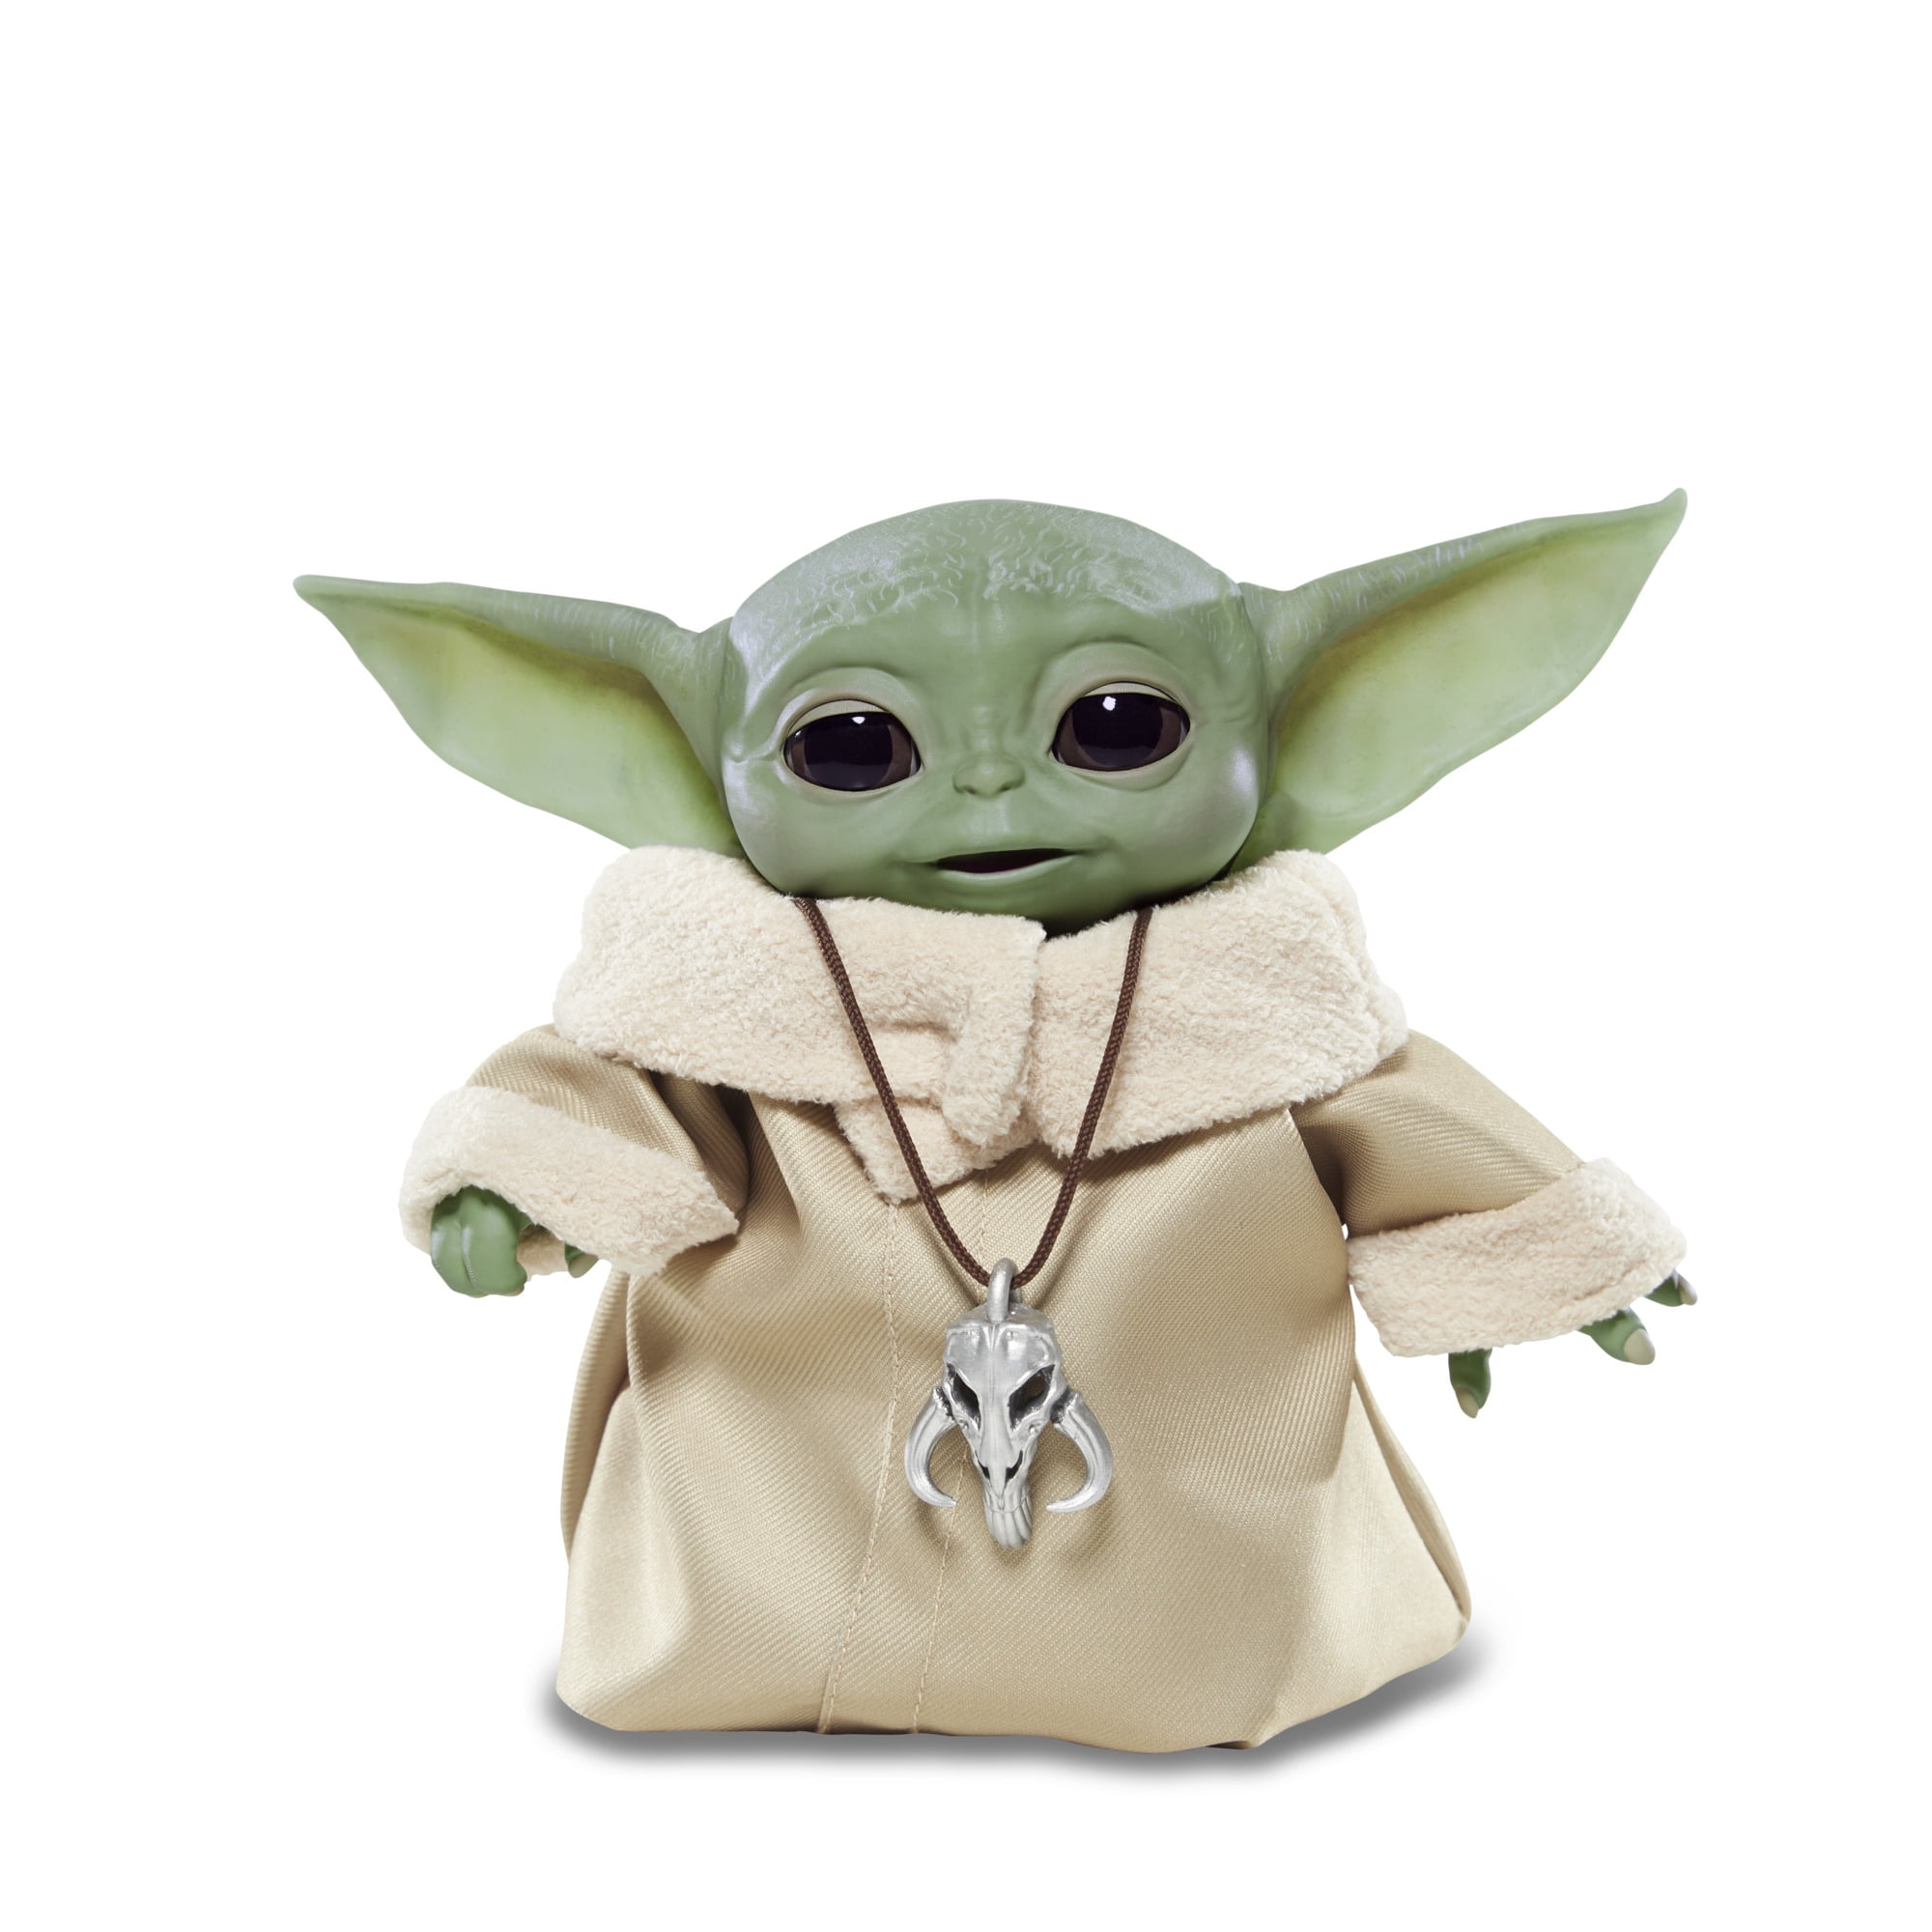 Details about   lego Star Wars Baby Yoda Plush Toys The Asset The Child Cartoon Plush star war 